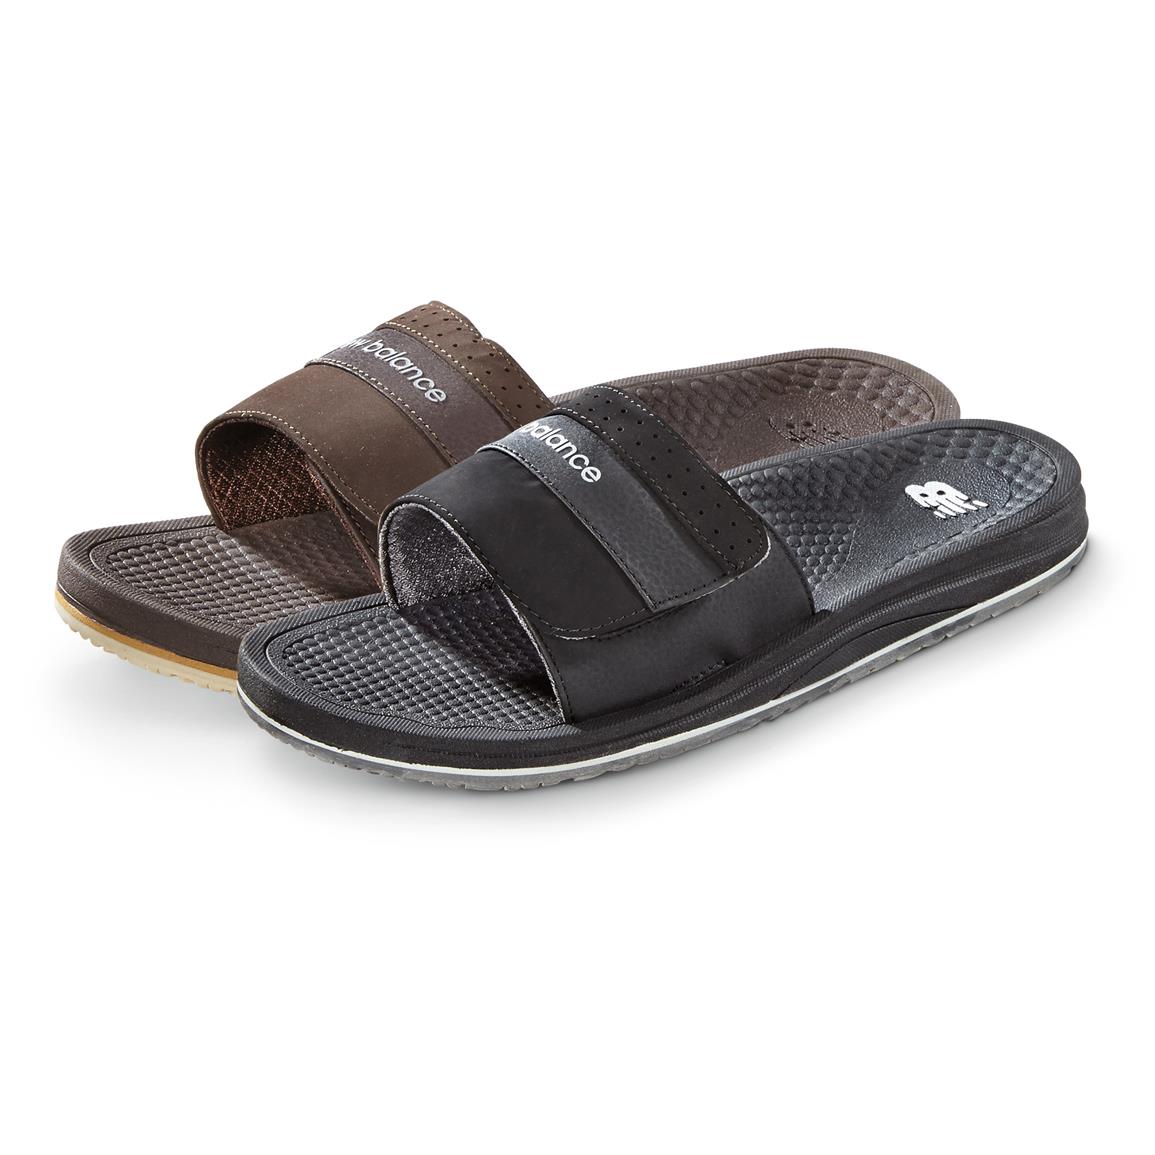 New Balance Men's PureAlign Slide Sandals - 655868, Sandals & Flip ...